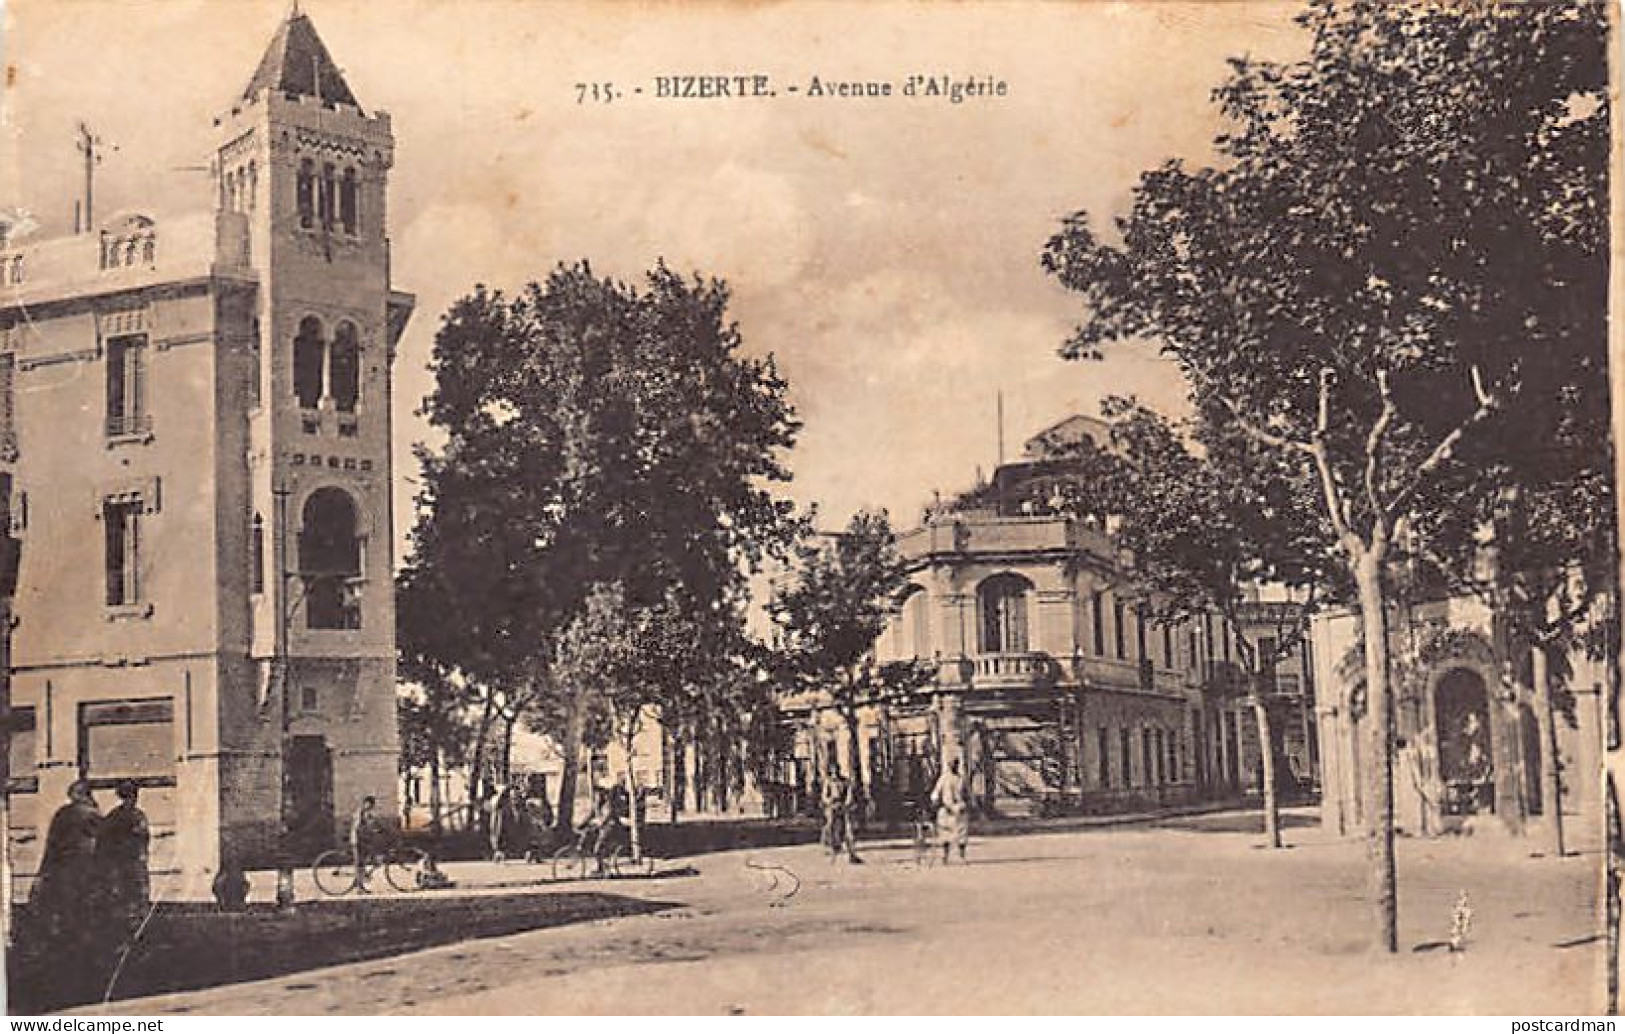 Tunisie - BIZERTE - Avenue D'Algérie - Ed. EMT 715 - Tunisie